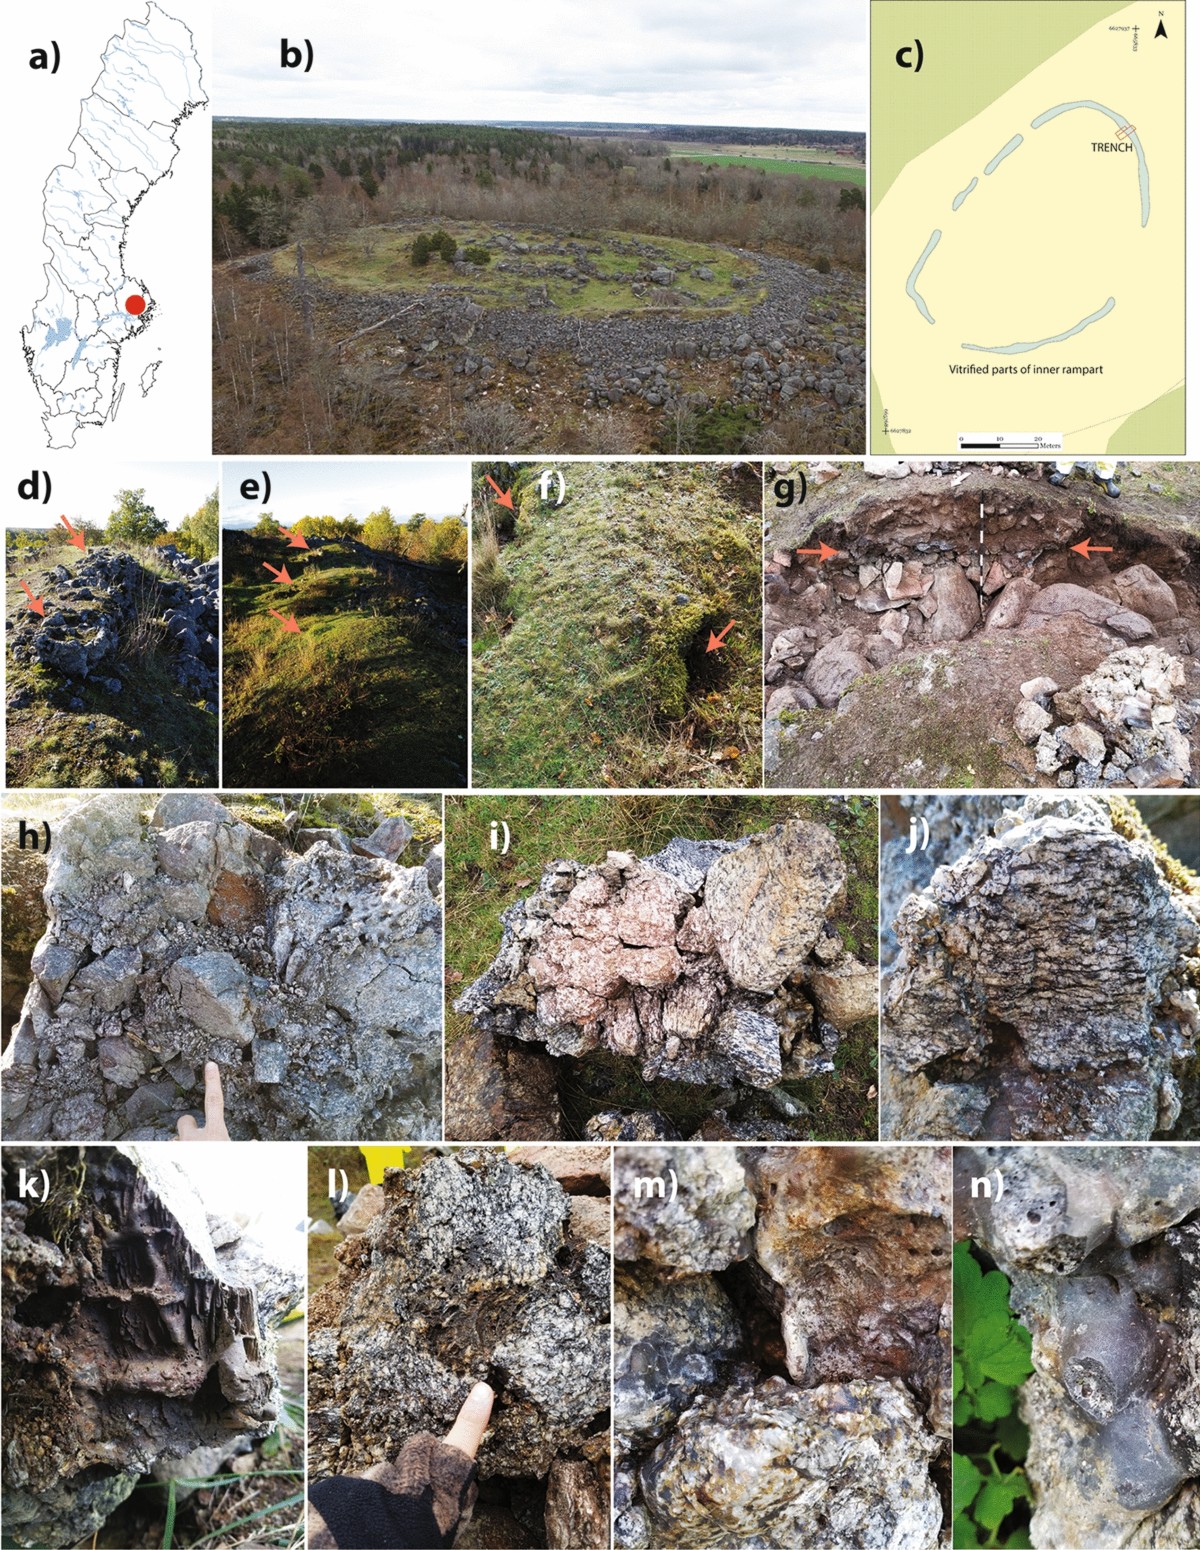 Reproduction of melting behavior for vitrified hillforts based on  amphibolite, granite, and basalt lithologies | Scientific Reports